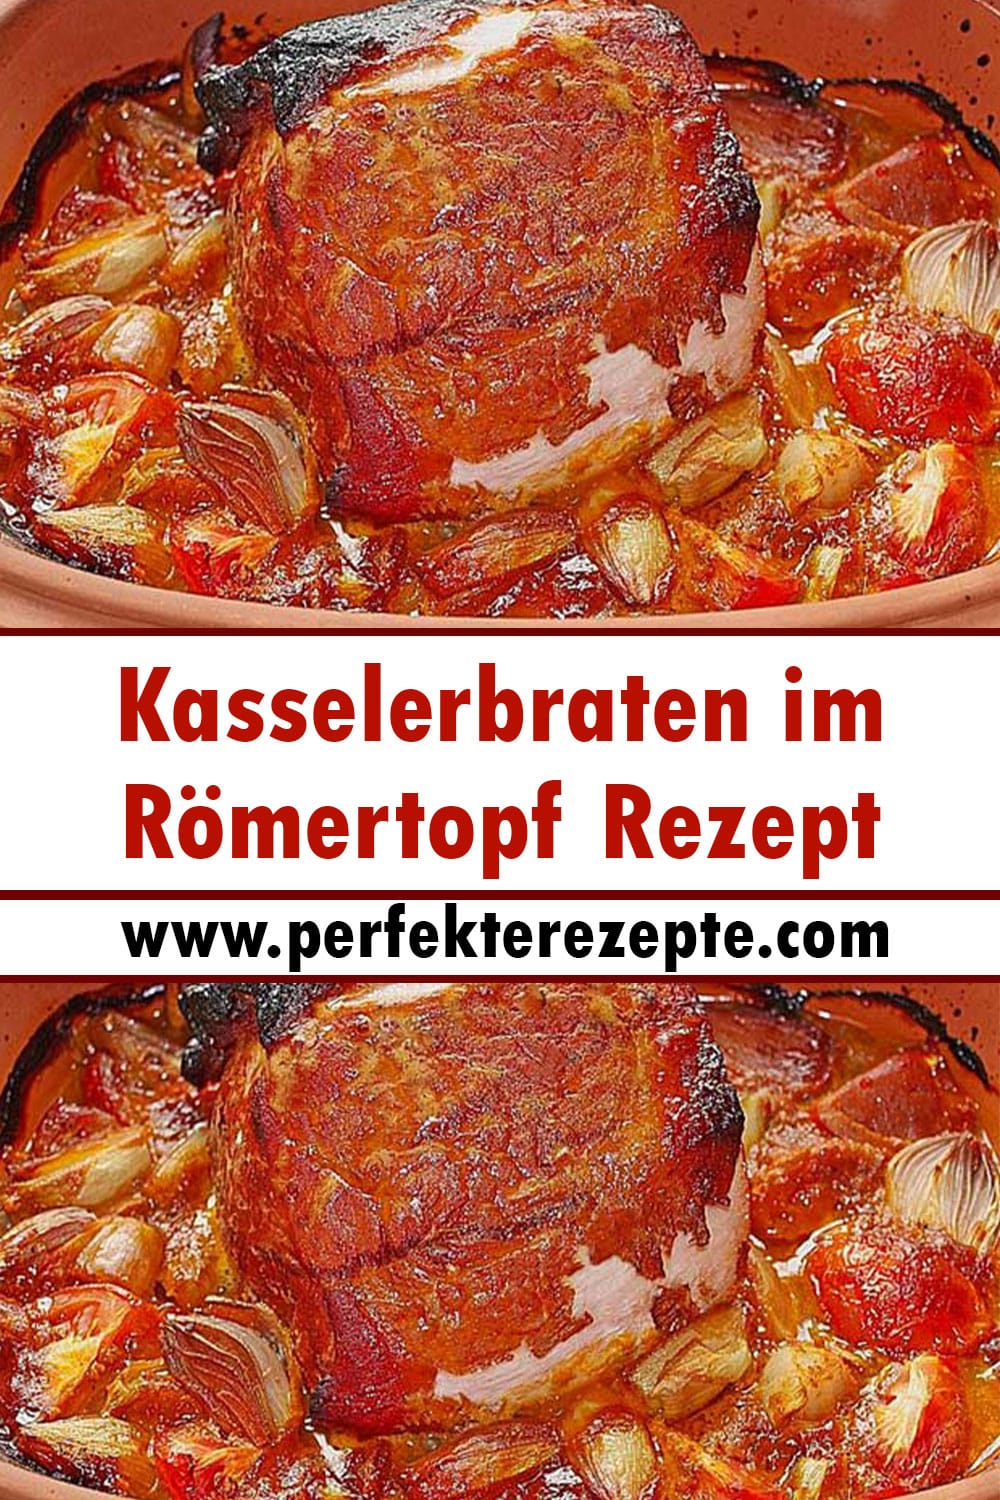 Kasselerbraten im Römertopf Rezept, die Soße ist der Wahnsinn!